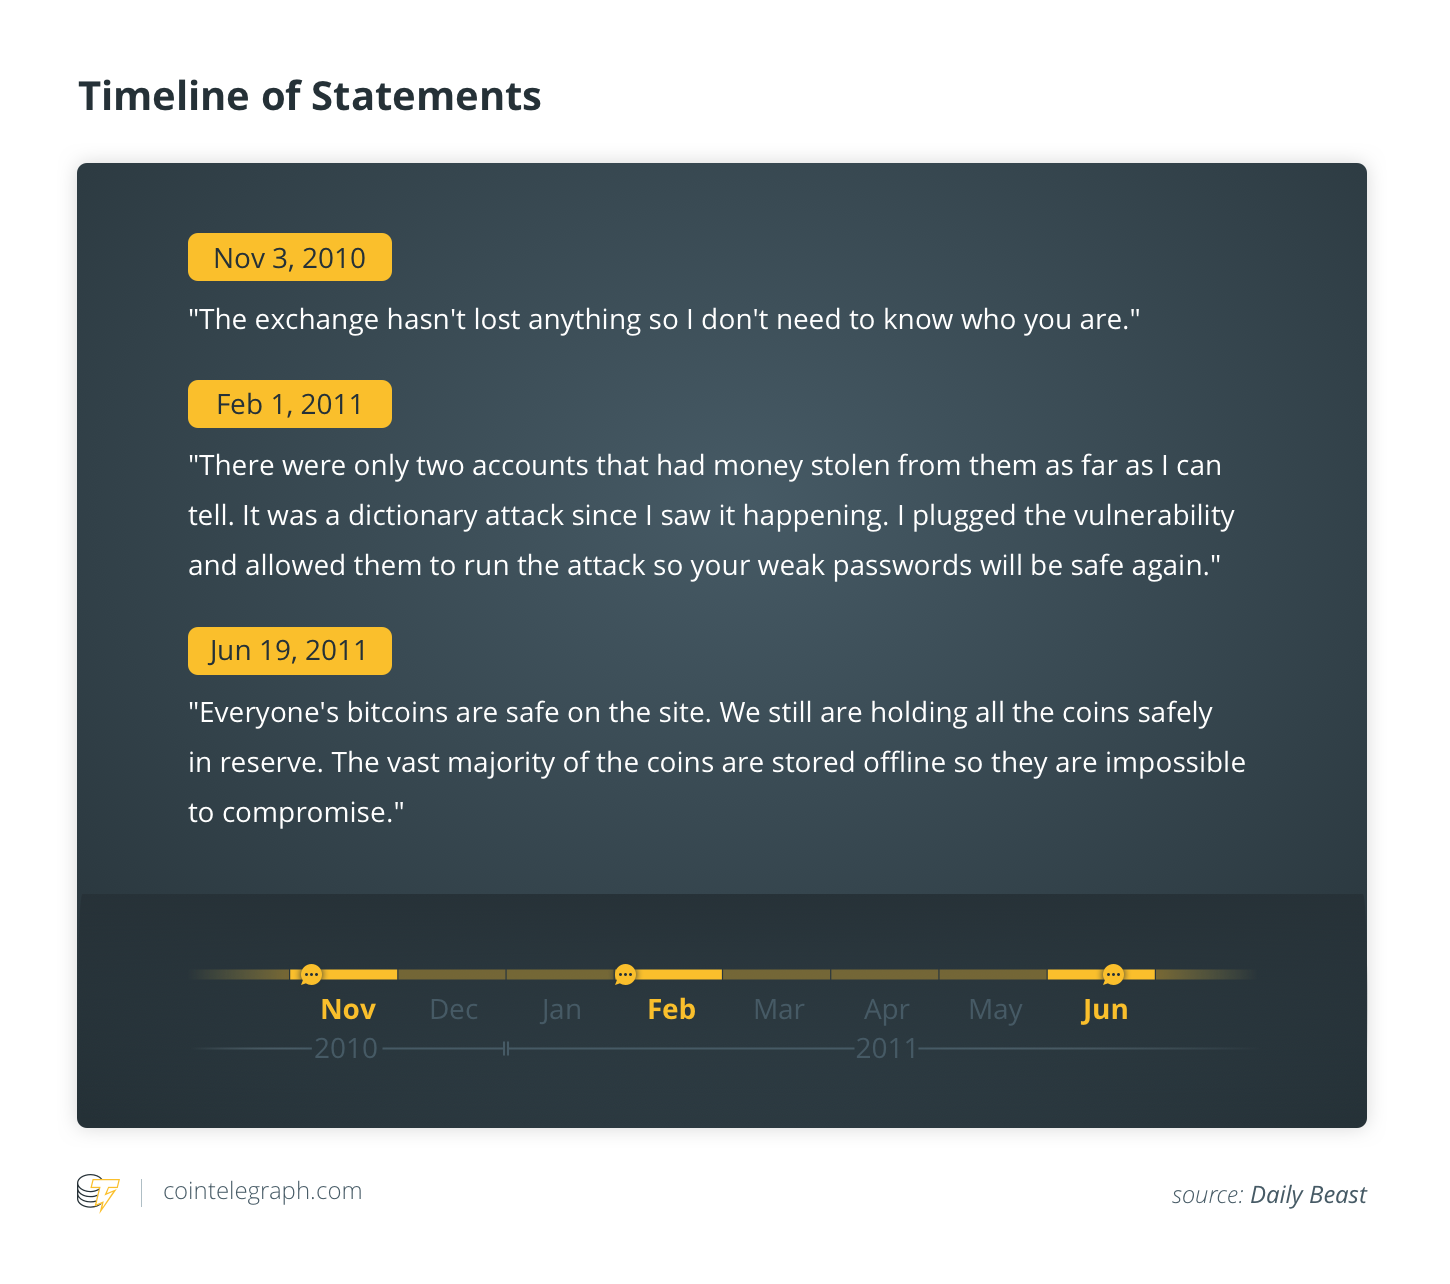 Timeline of Statements